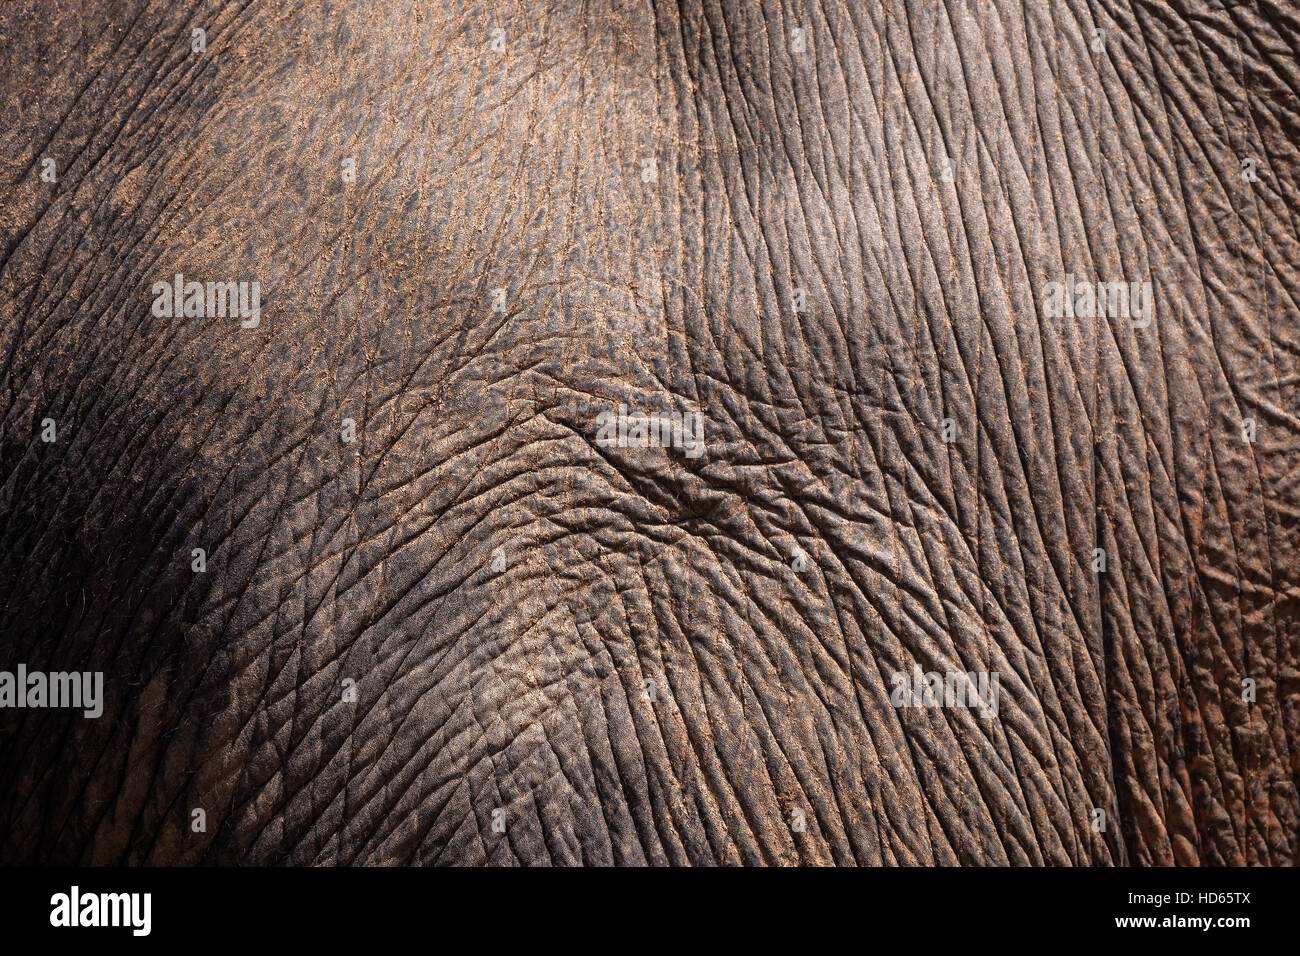 Asian elephant (Elephas maximus), skin, Pinnawala Elephant Orphanage, Pinnawala, Central Province, Sri Lanka Stock Photo